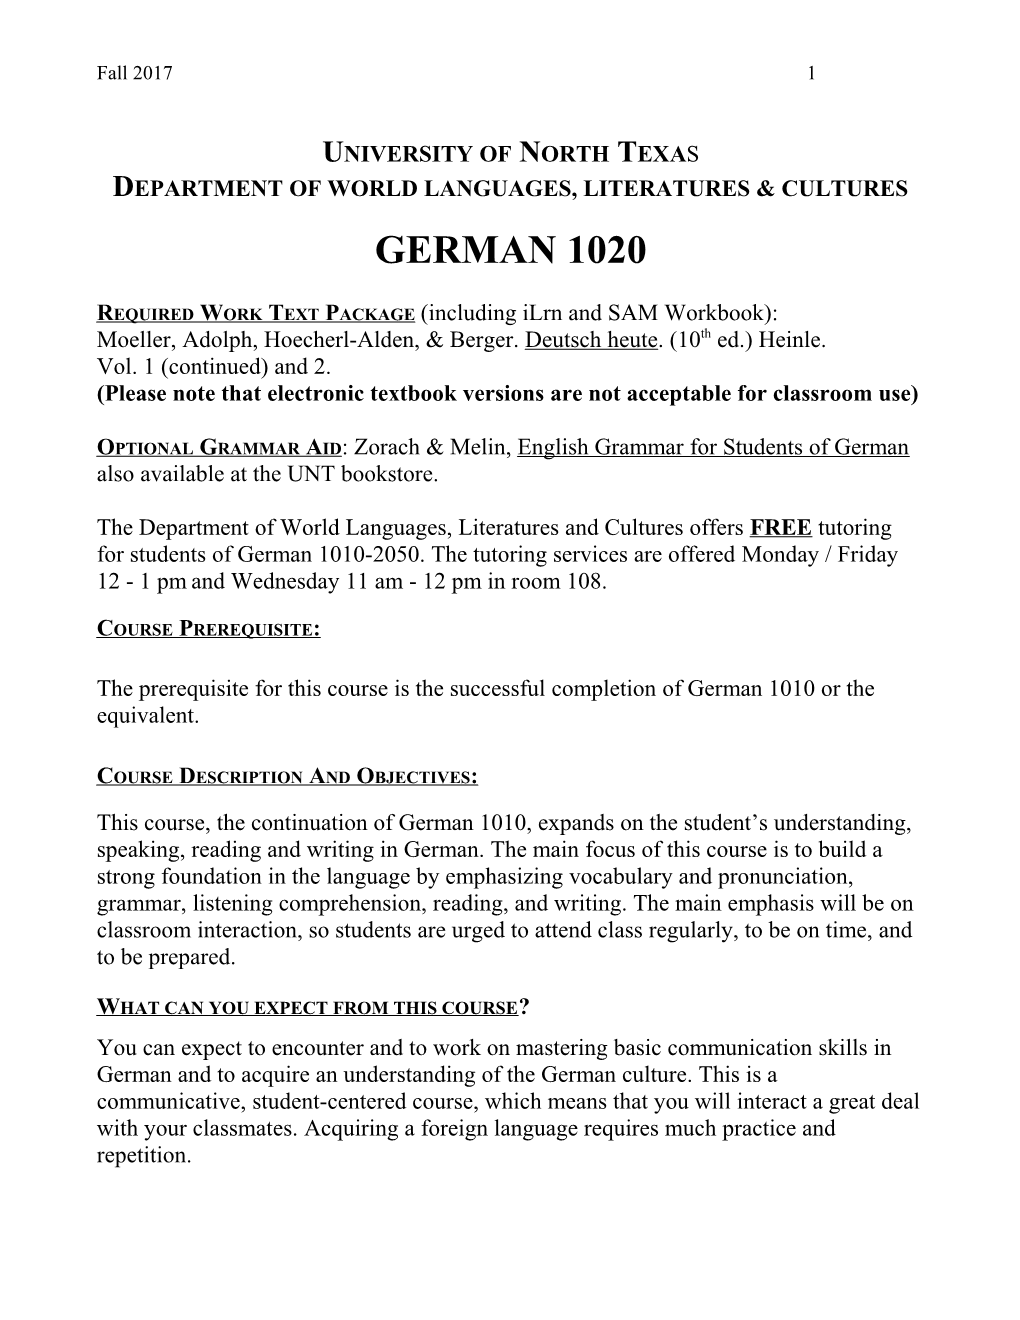 University of North Texa S Department of World Languages, Literatures & Cultures German 1020 s2